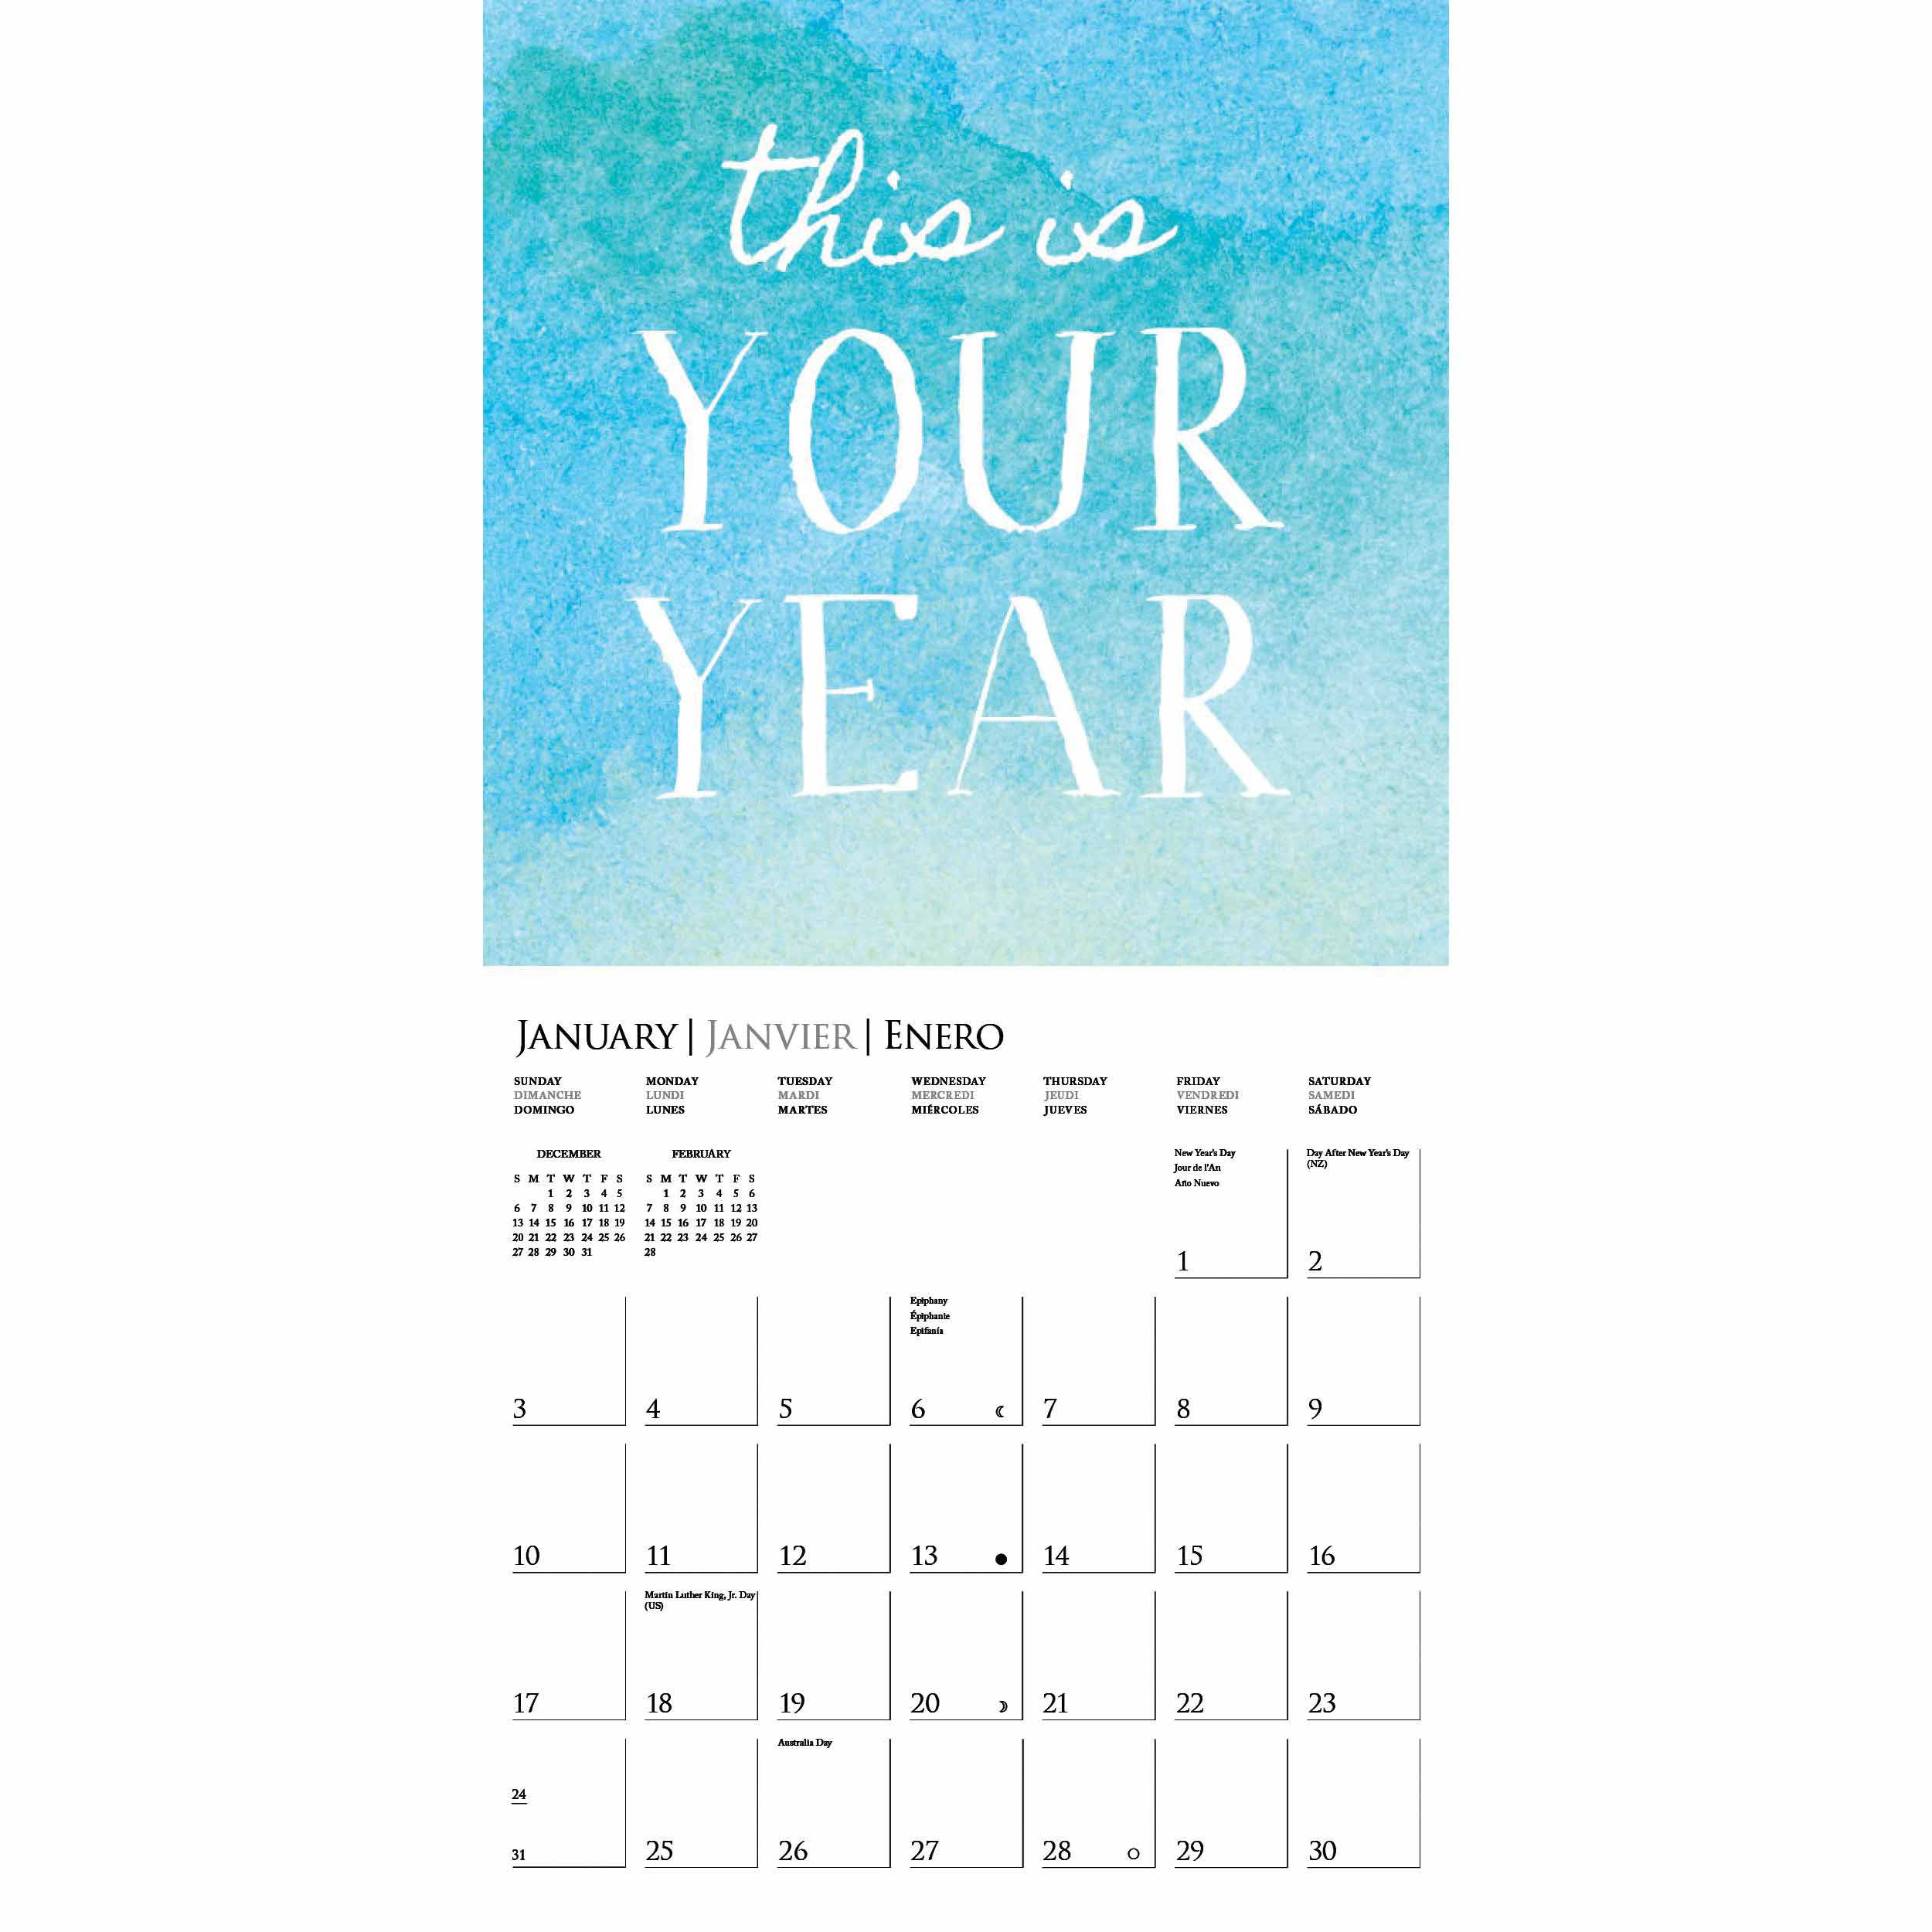 Best Day Ever Mini Calendar 2021 At Calendar Club-Day To Day Calendar 2021